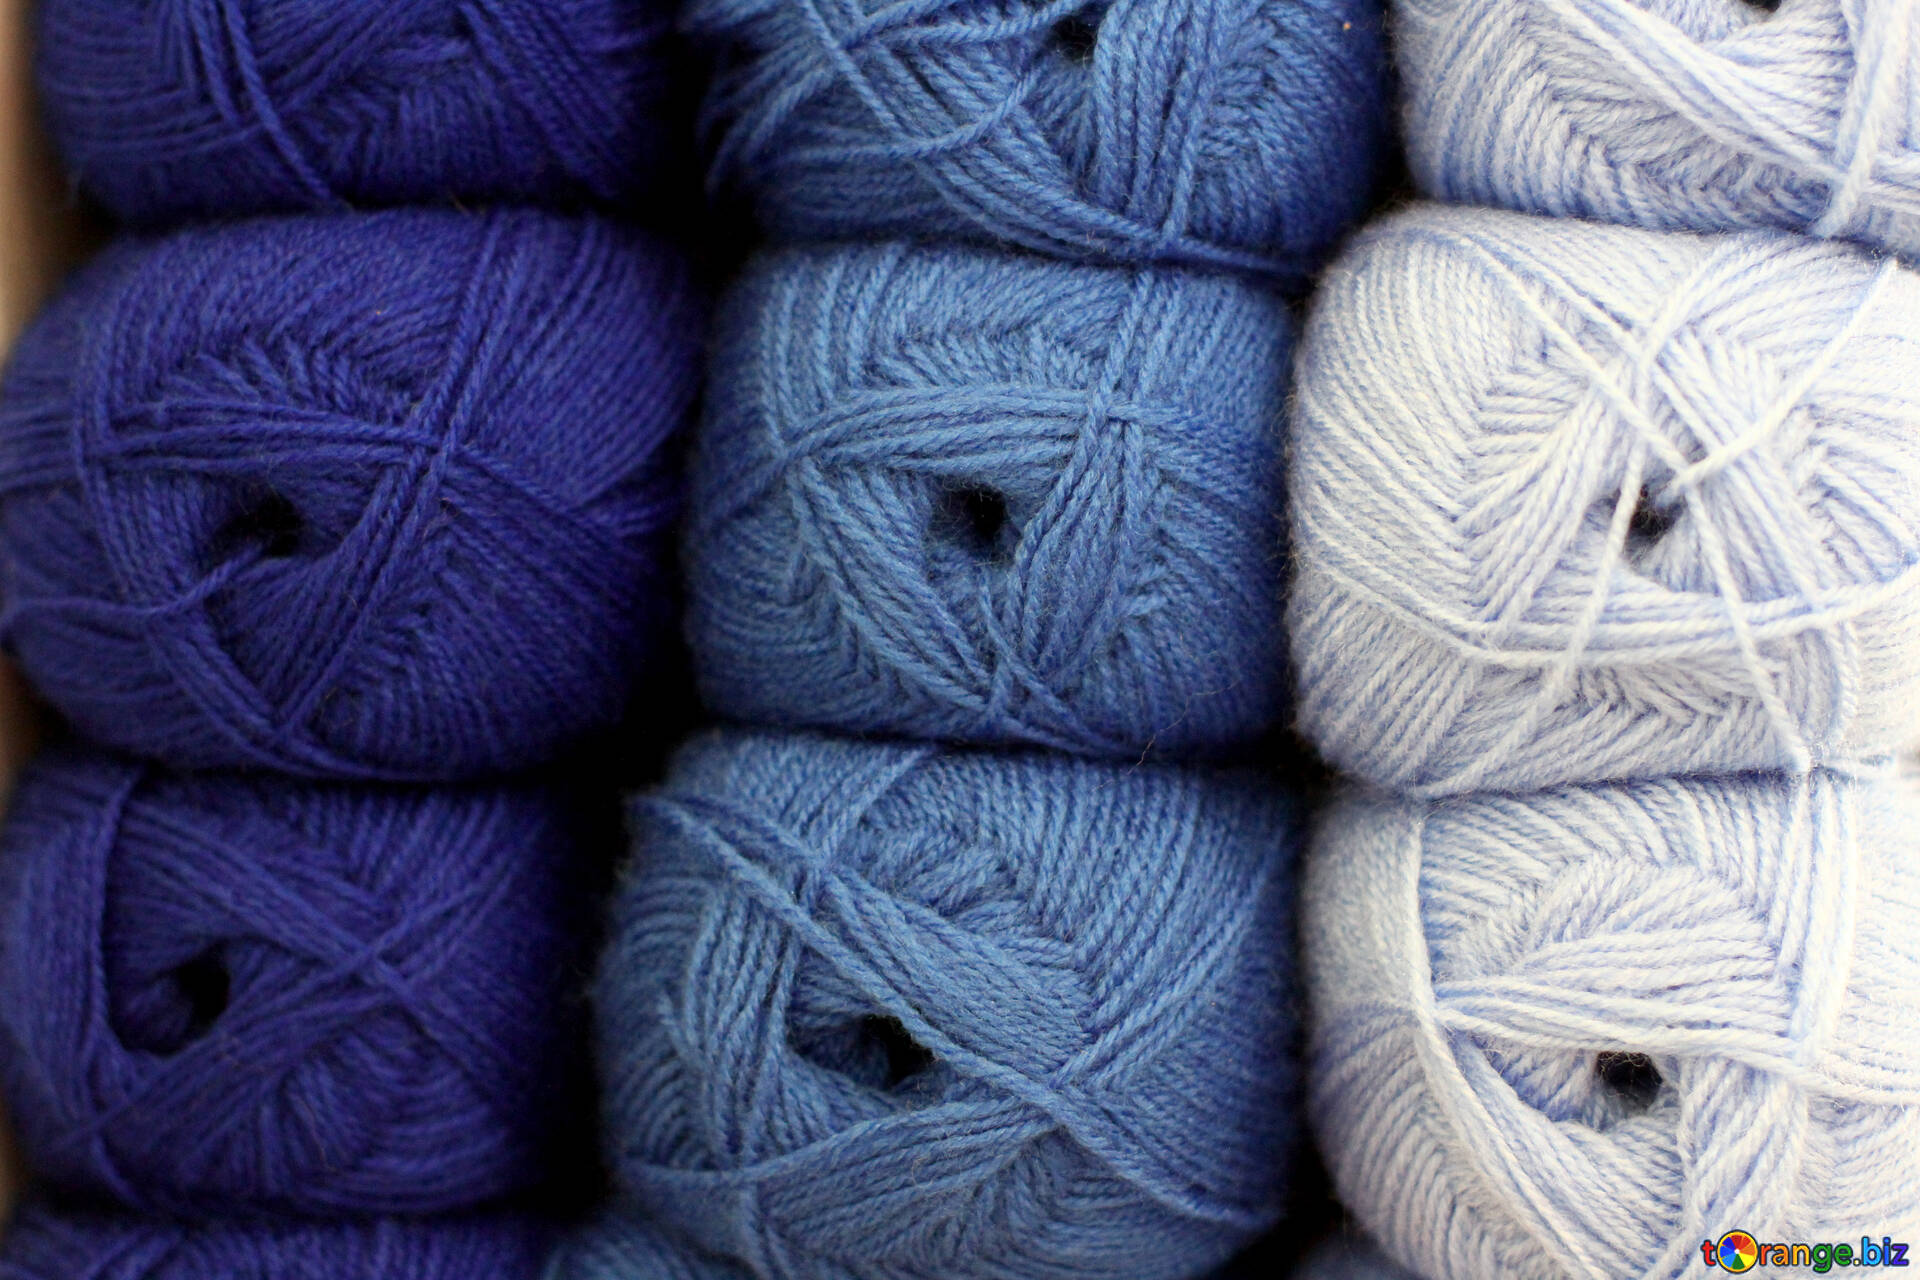 Knitting Image Wool Thread Yarn Blue Balls Image Creation